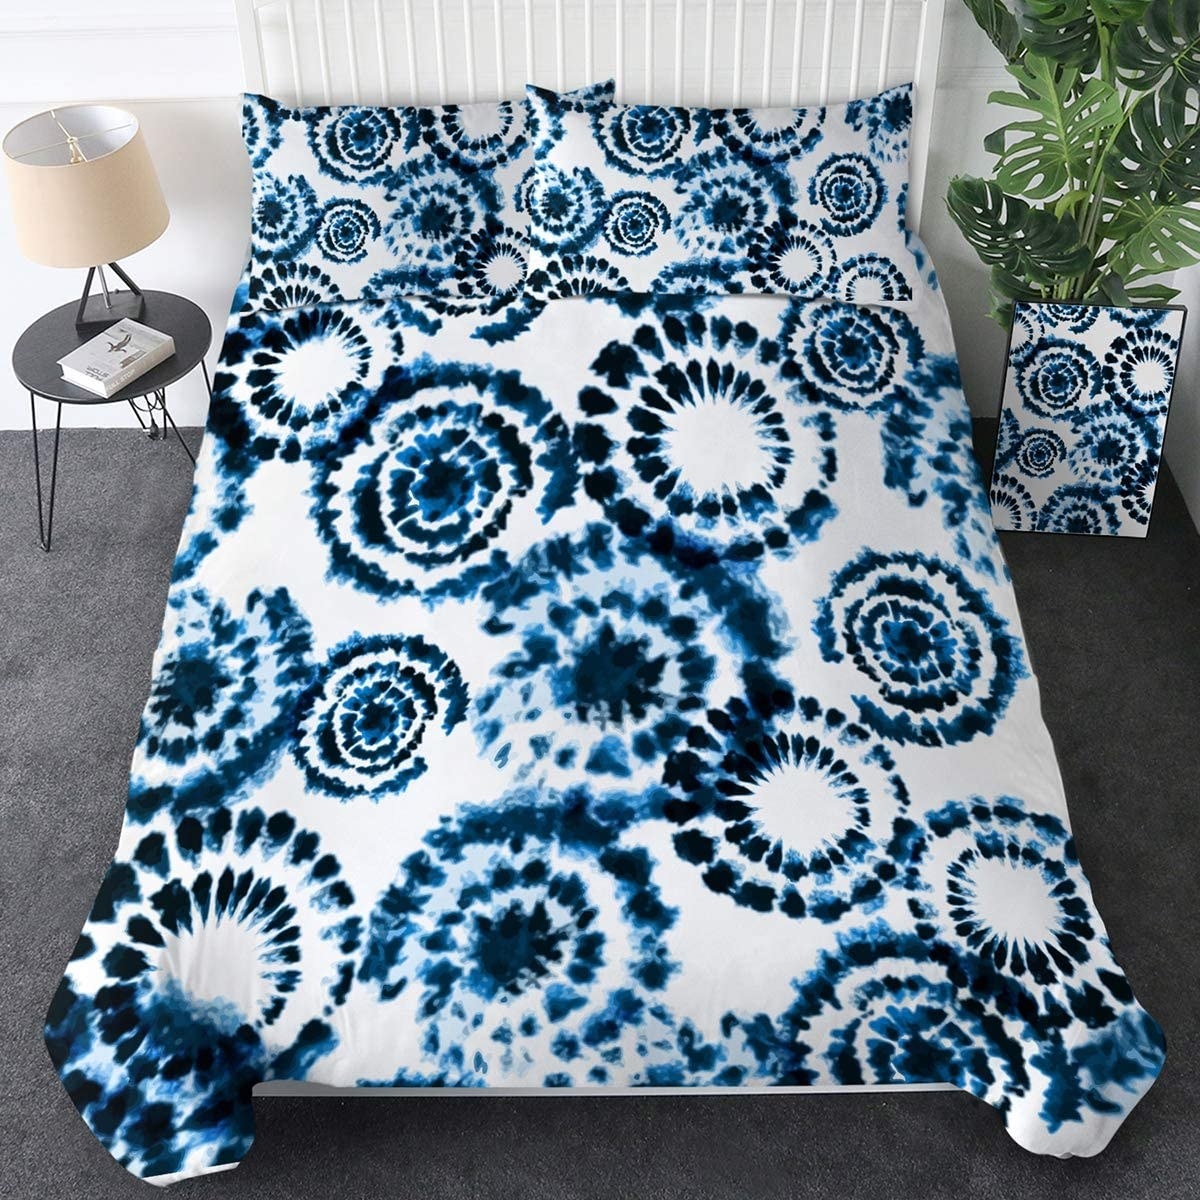 Blue and white circular tie dye bedding 